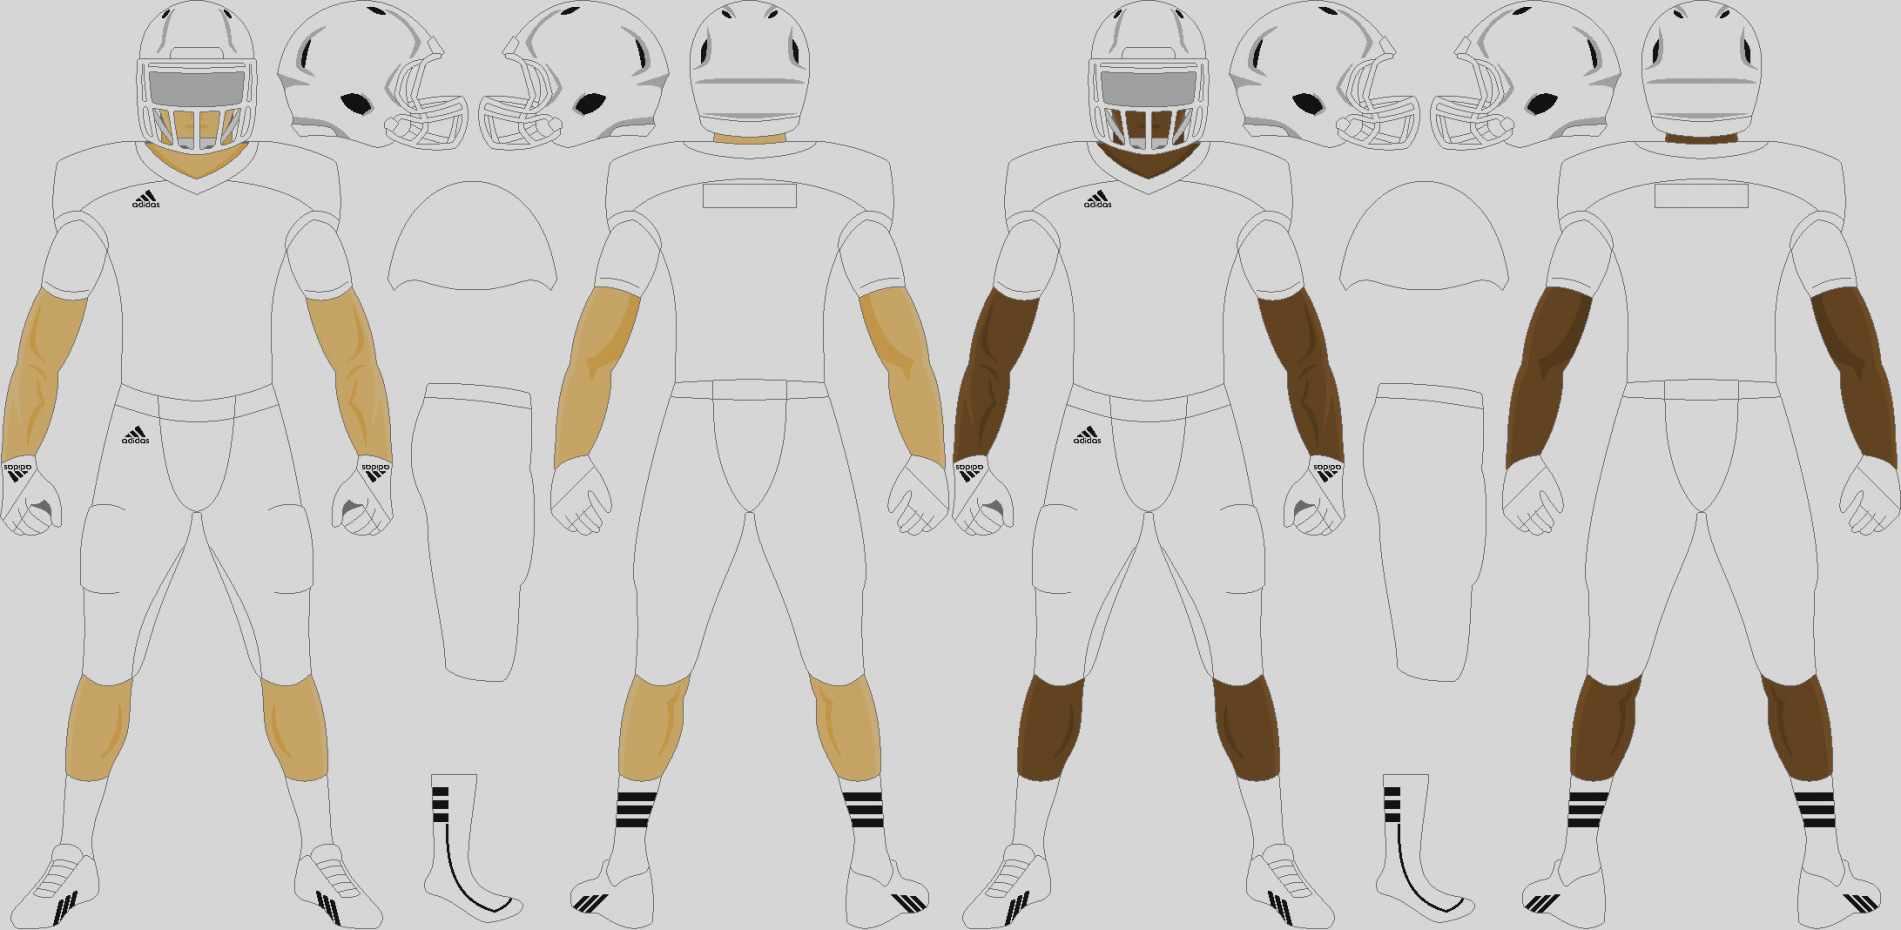 football-uniform-template-vector-at-getdrawings-free-download